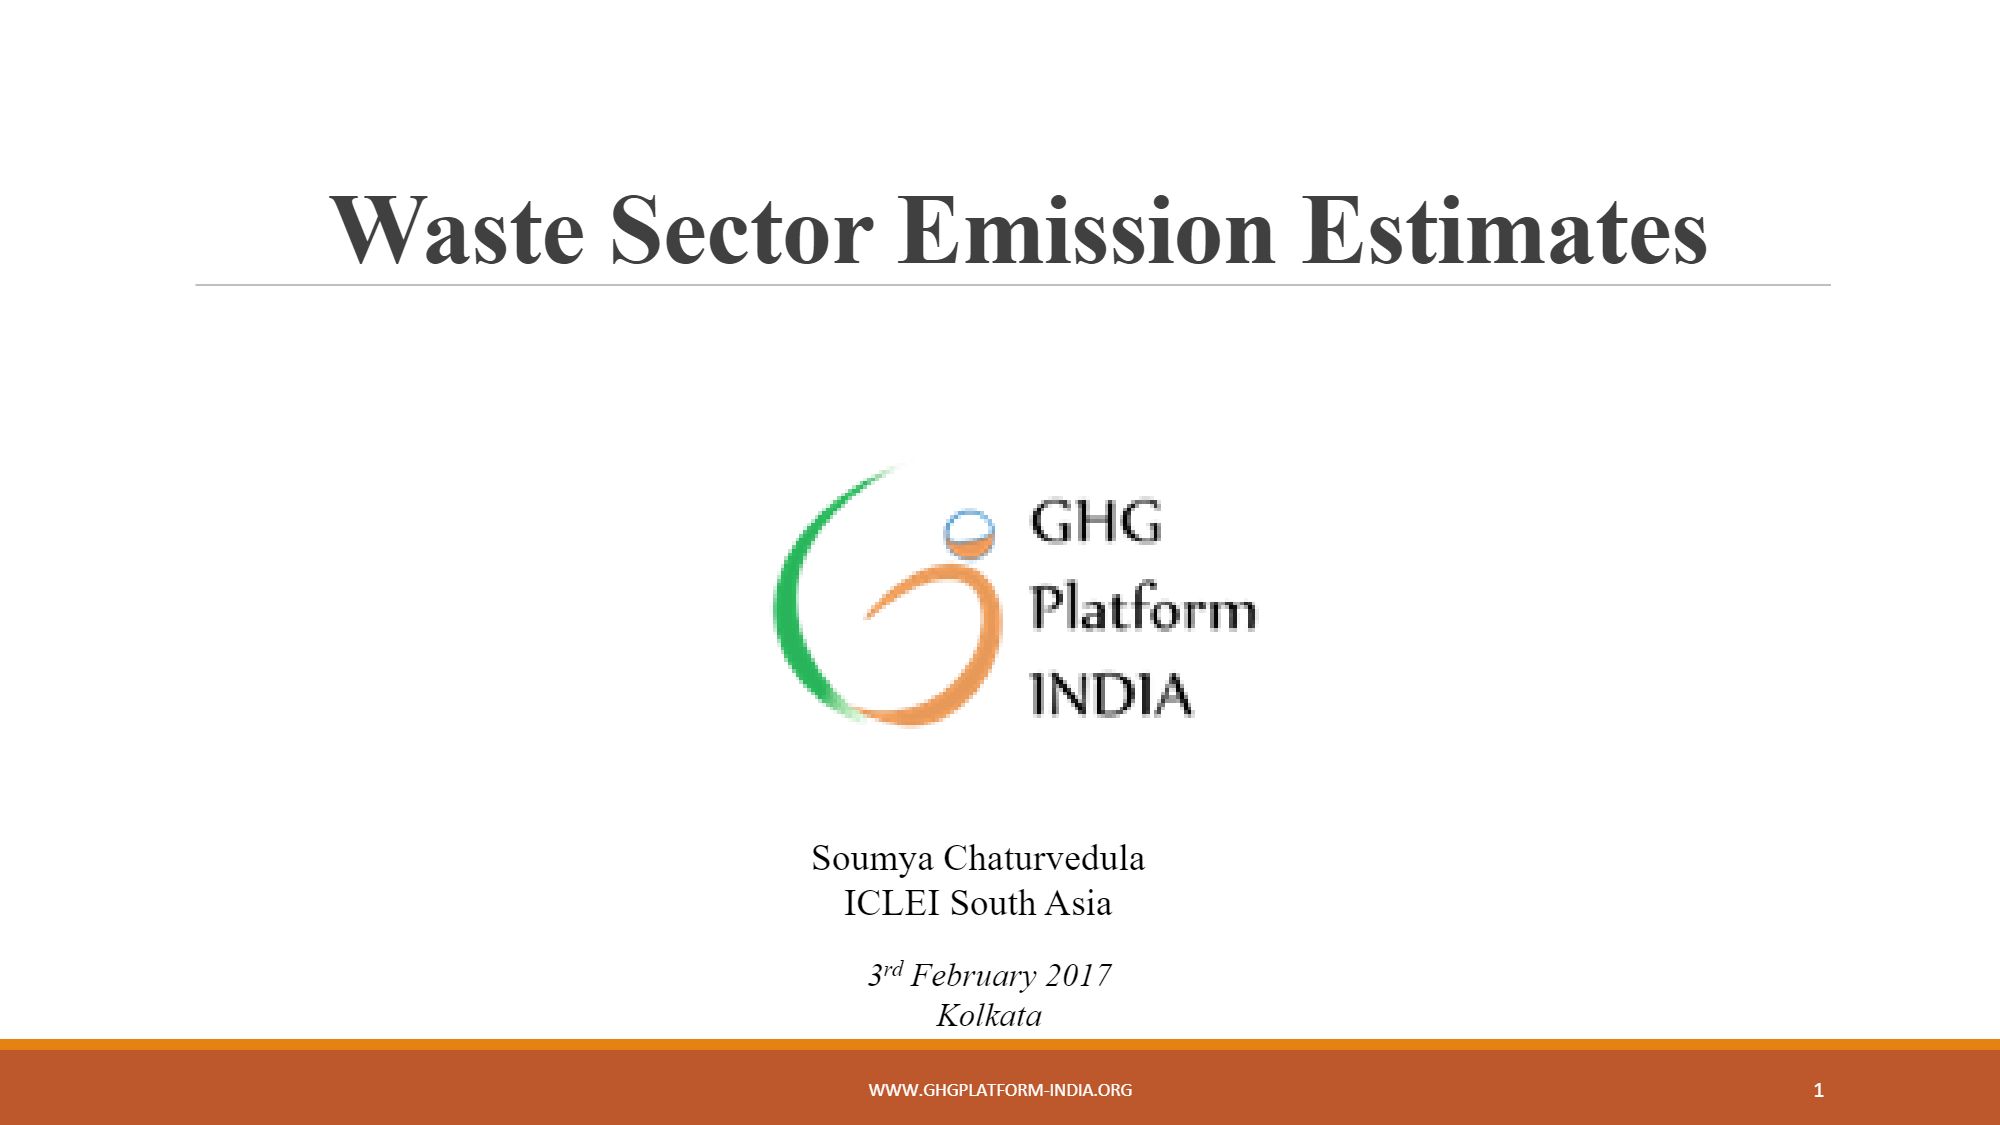 GHGPI-PhaseI-GHG Emission Estimates For India Waste Sector-Feb17-1